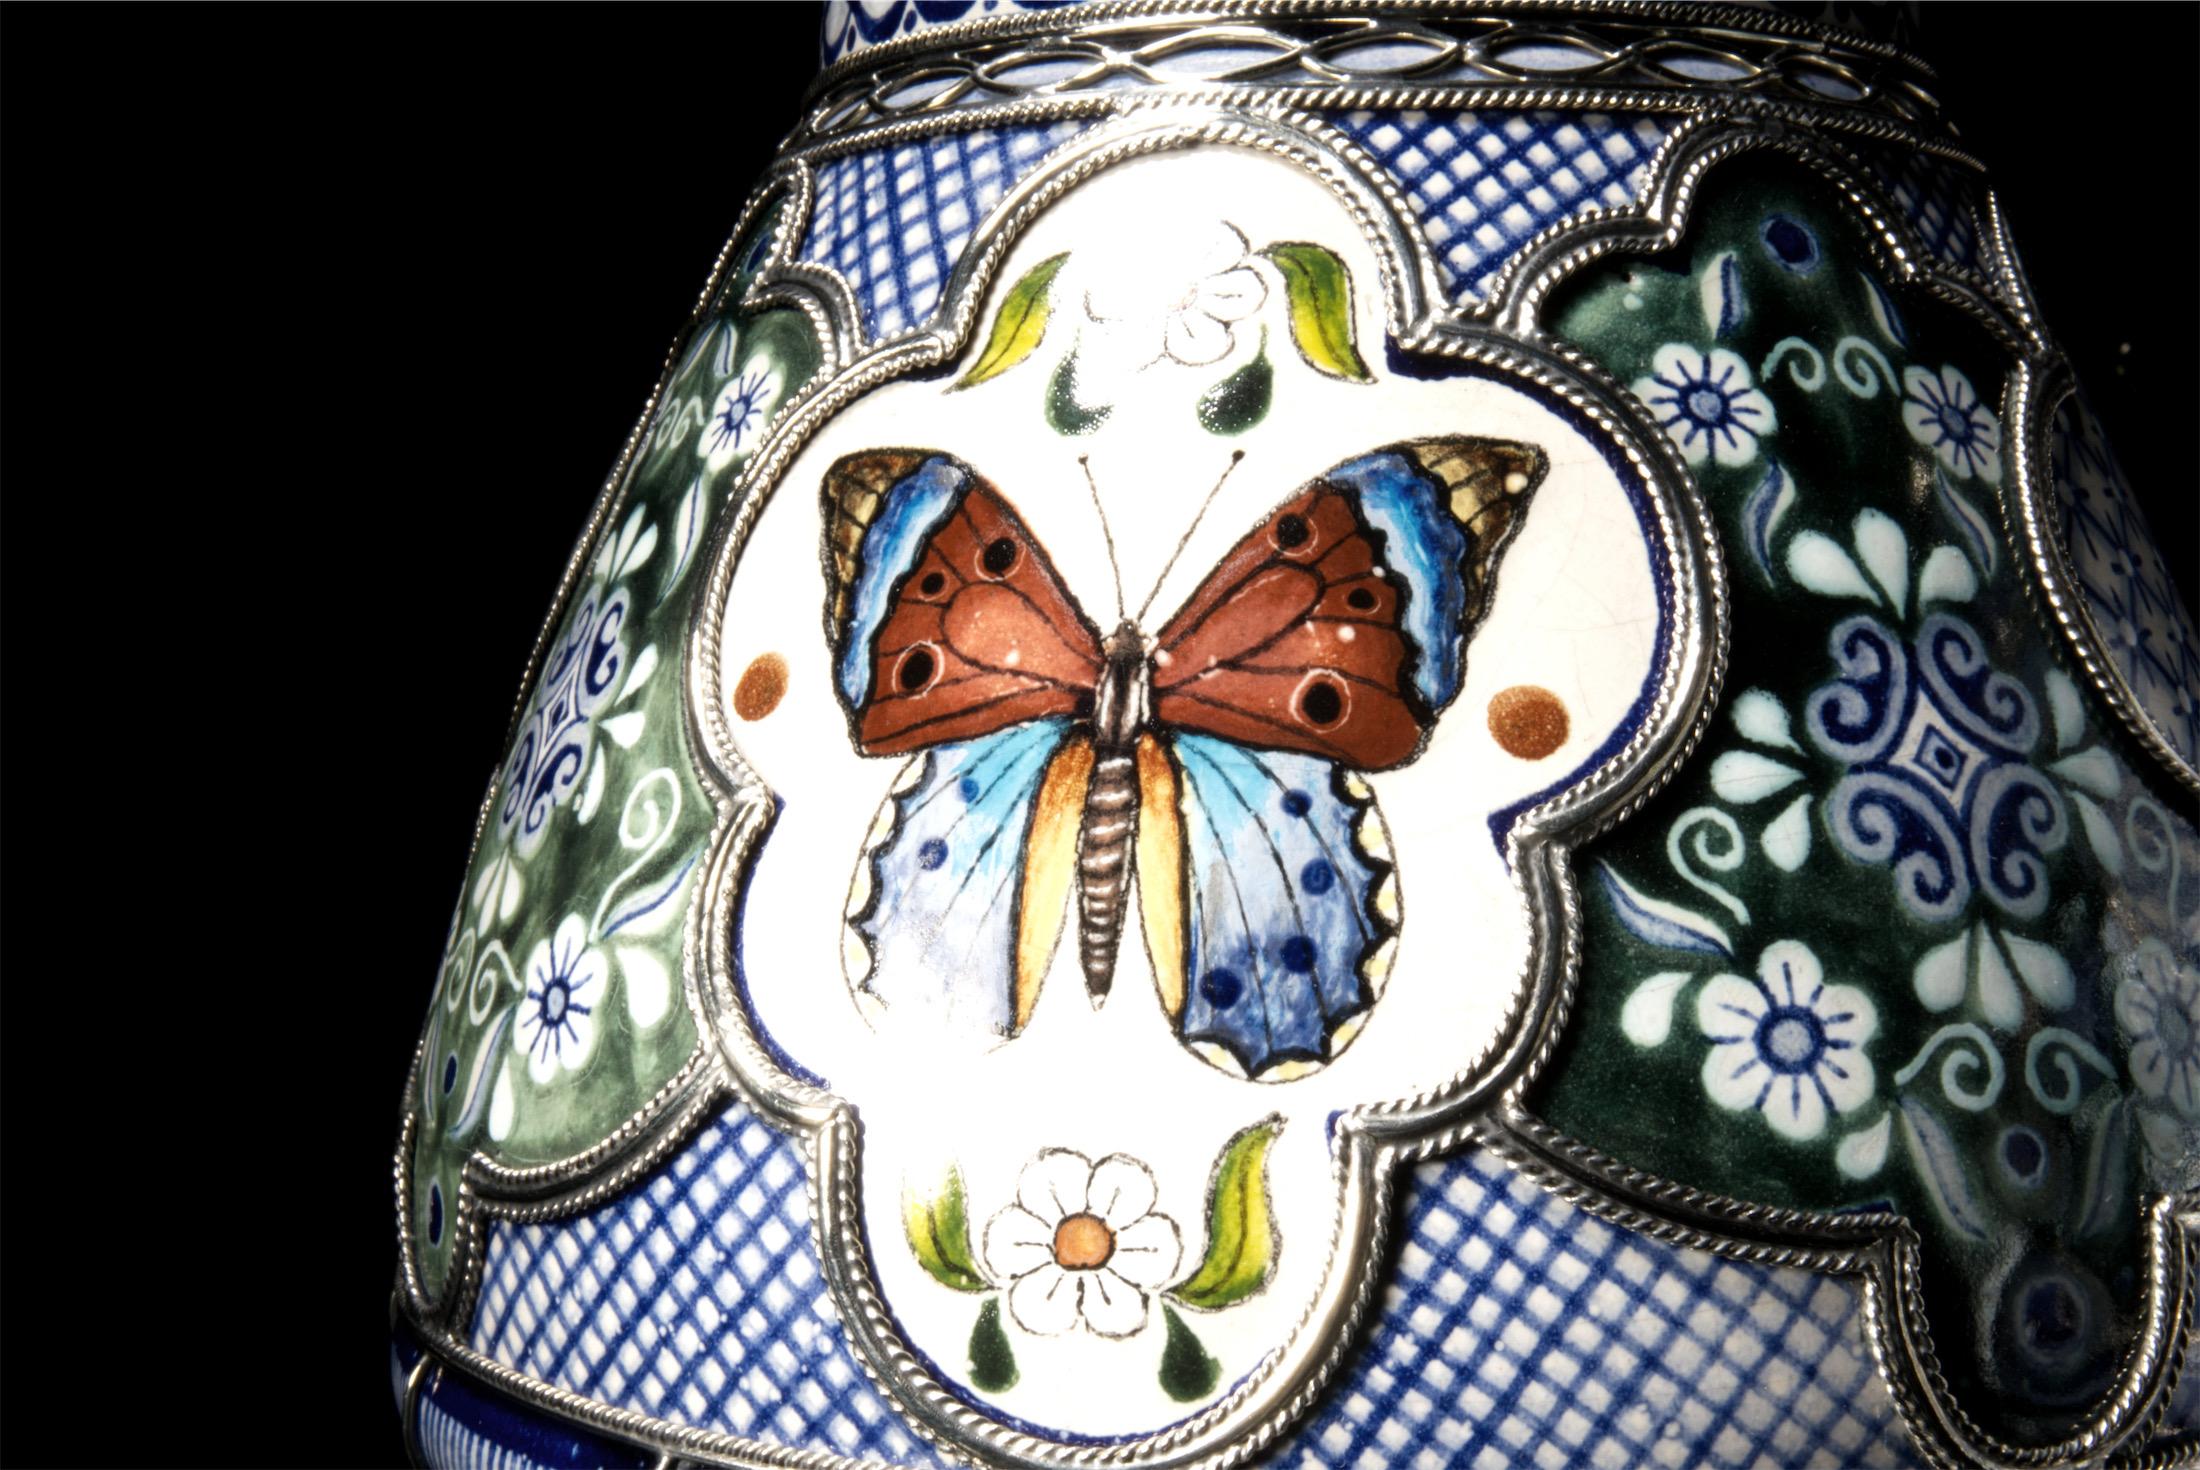 Contemporary Ceramic and White Metal 'Alpaca' Jar with Hand Painted Motives Pair